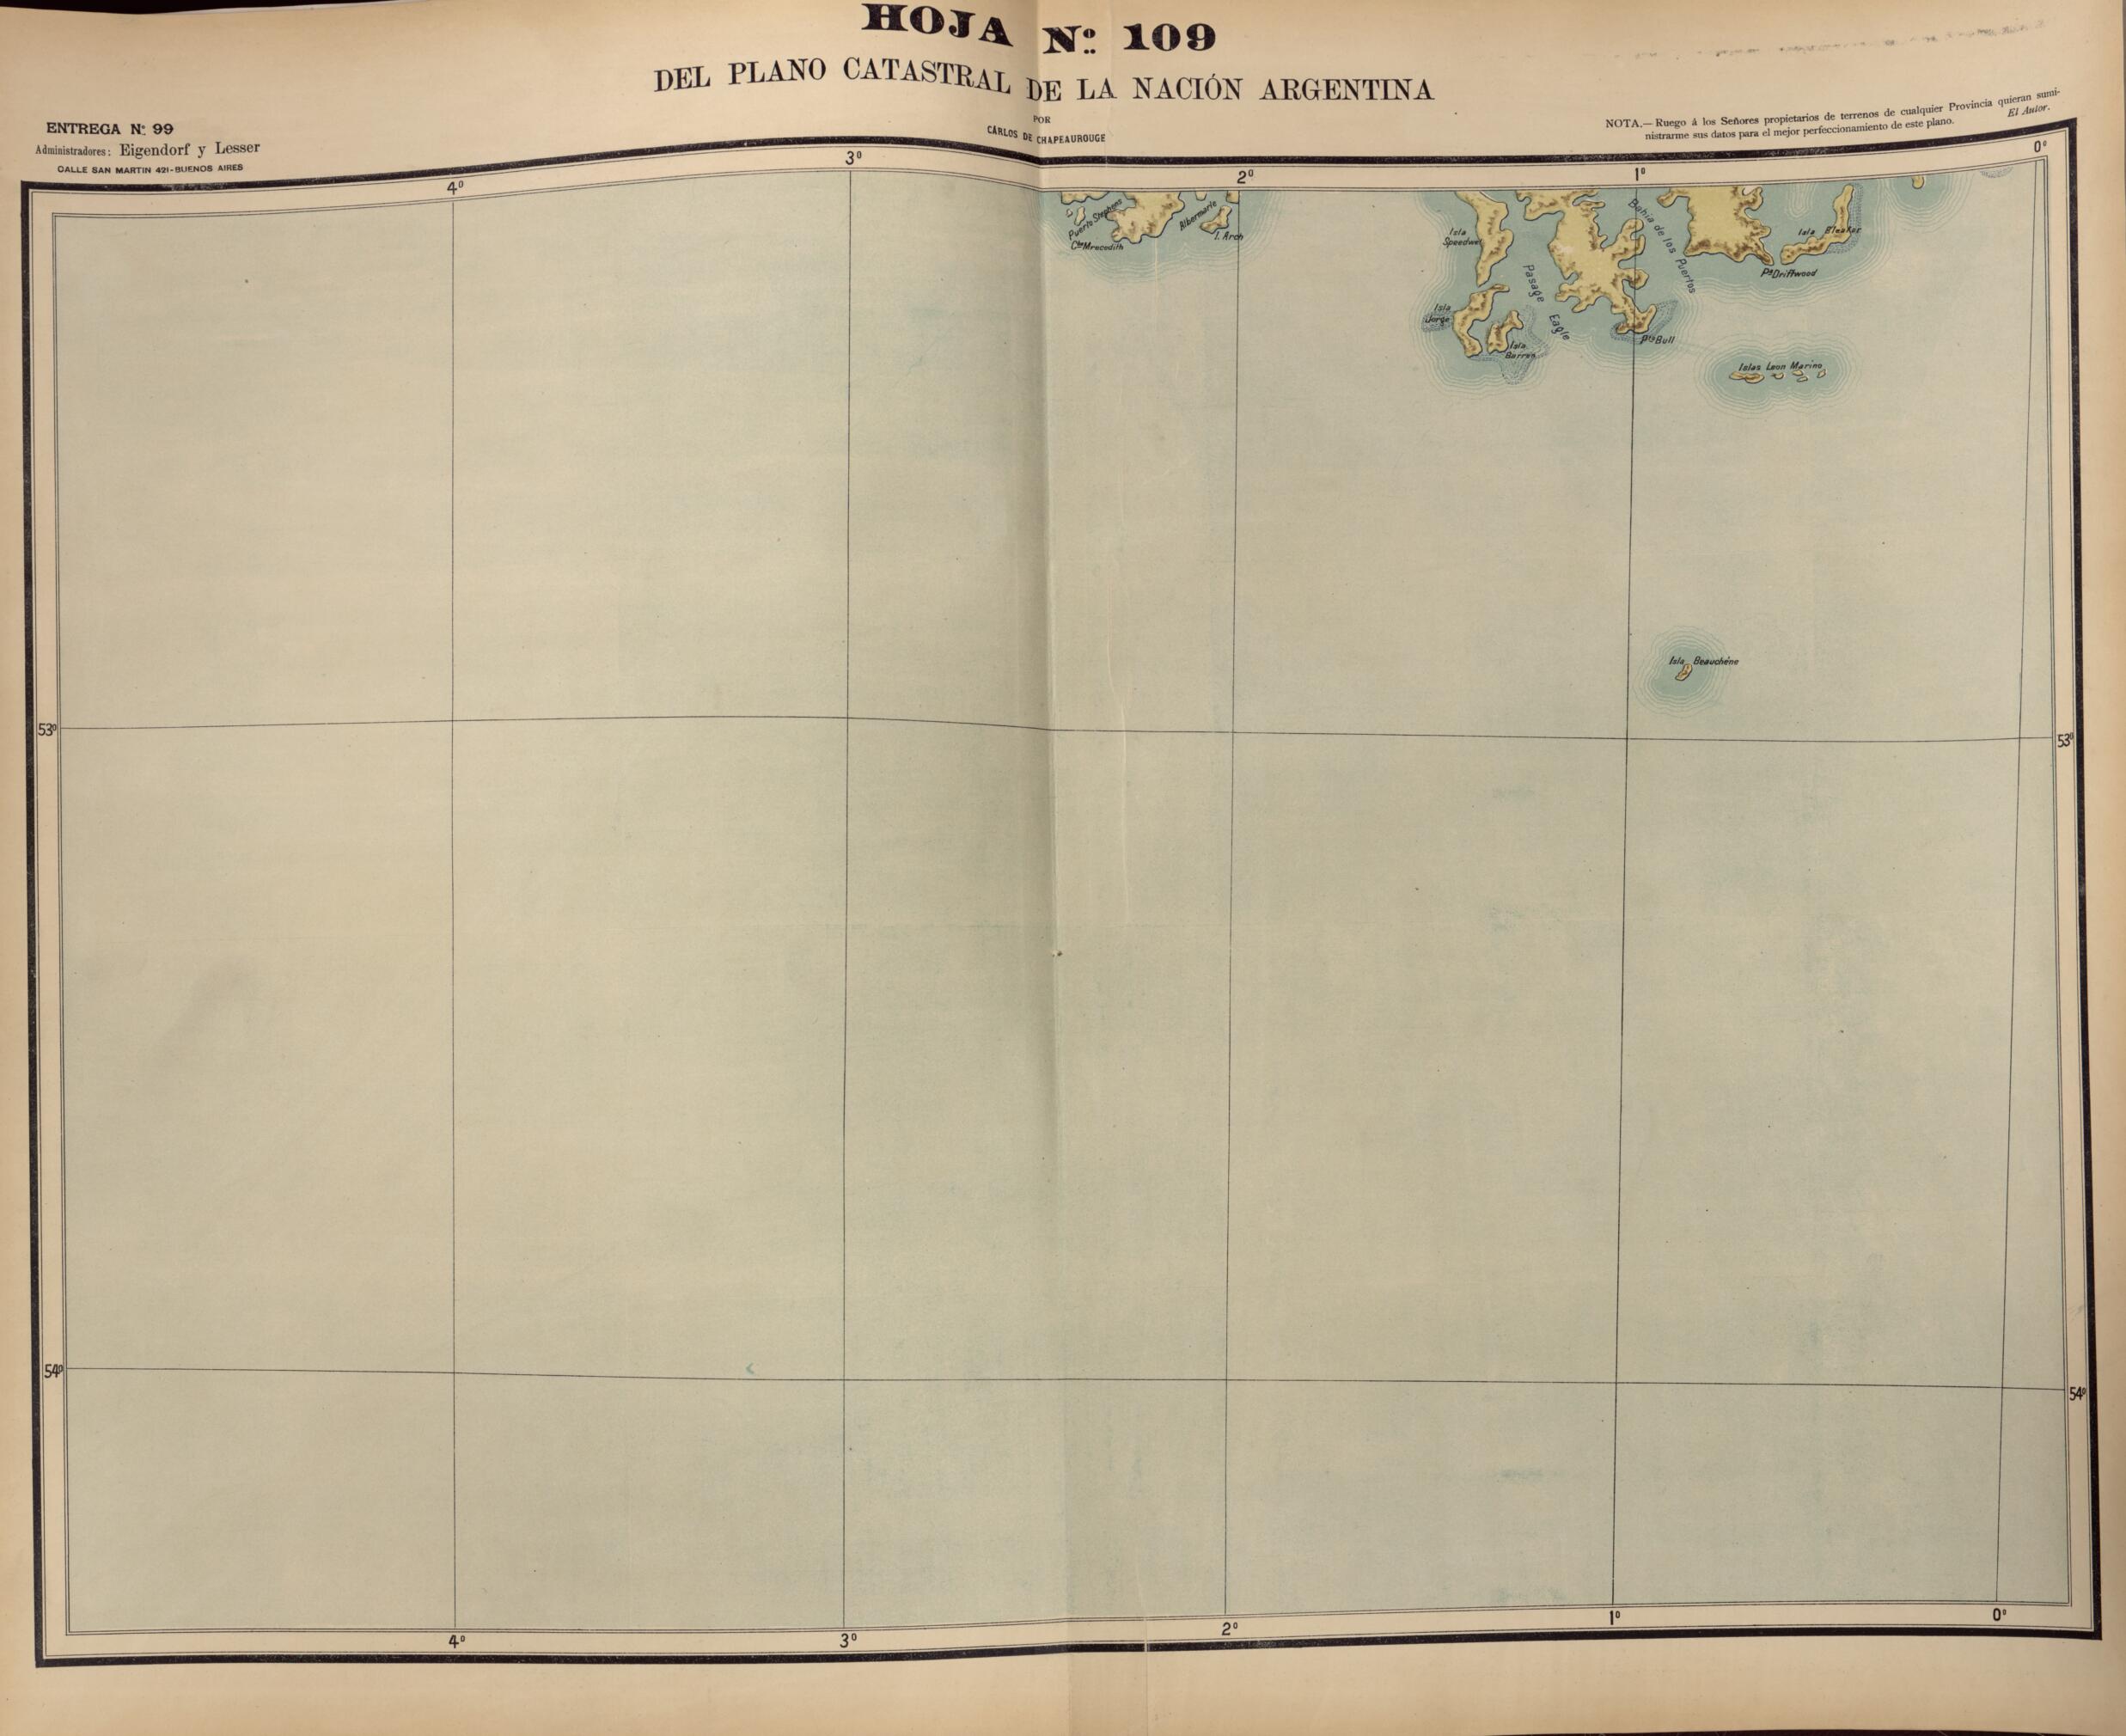 This old map of Plano Catastral De La Nacion Hoja No. 109 from República Argentina from 1905 was created by Carlos De Chapeaurouge in 1905